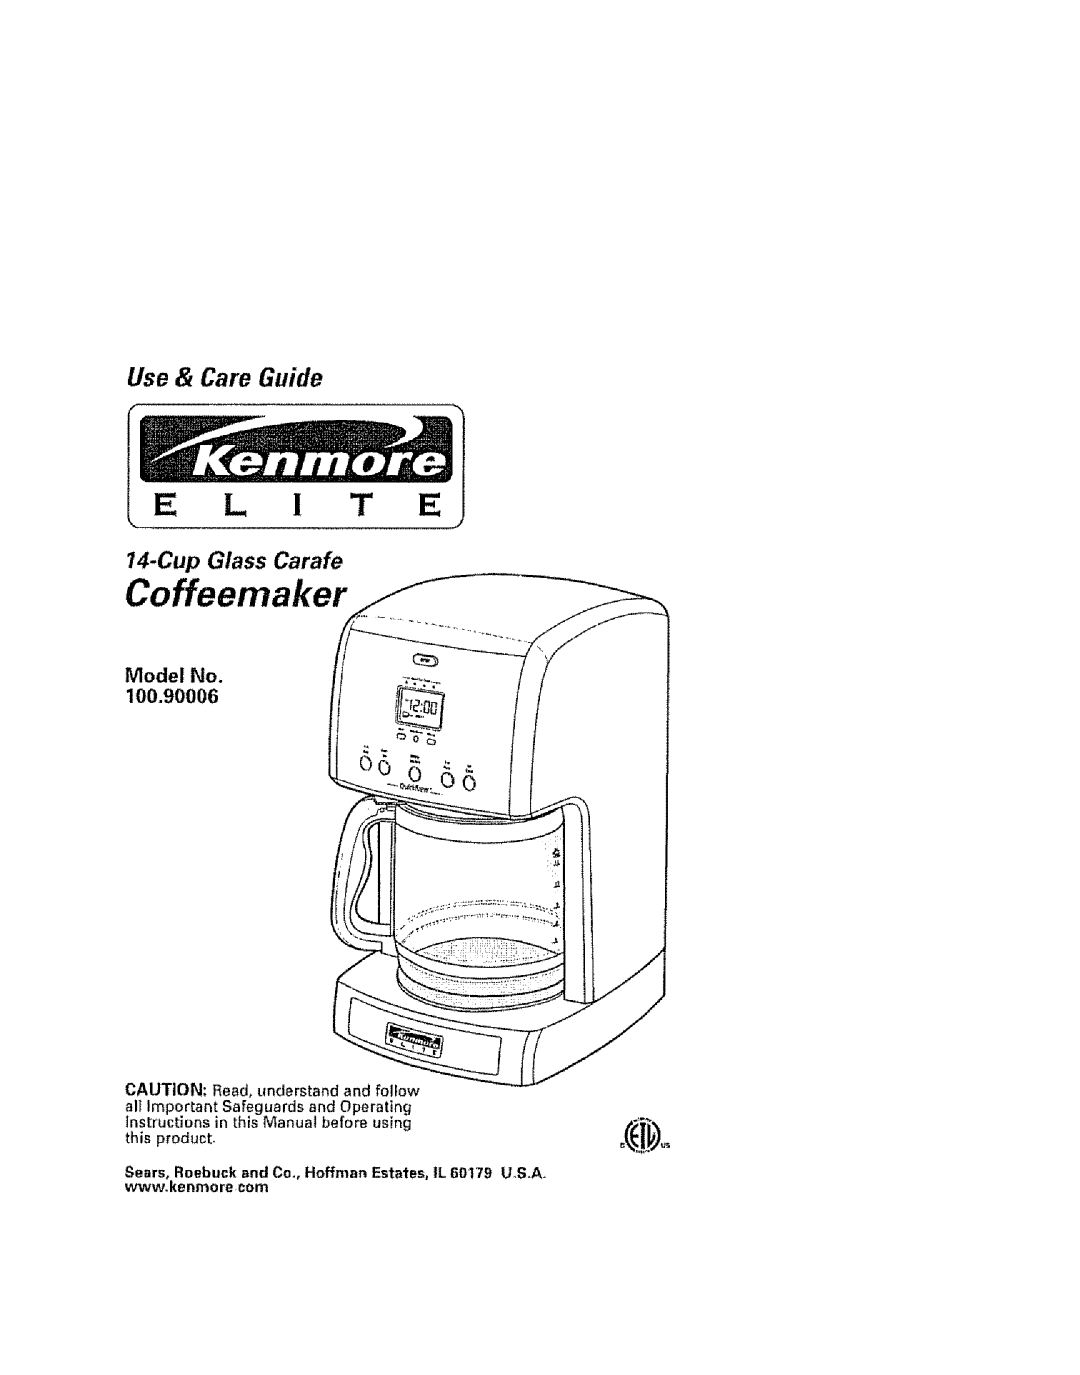 Kenmore 100.90006 operating instructions Coffeemaker, E L I T E, Use & Care Guide, CupGlass Carafe, Model No 